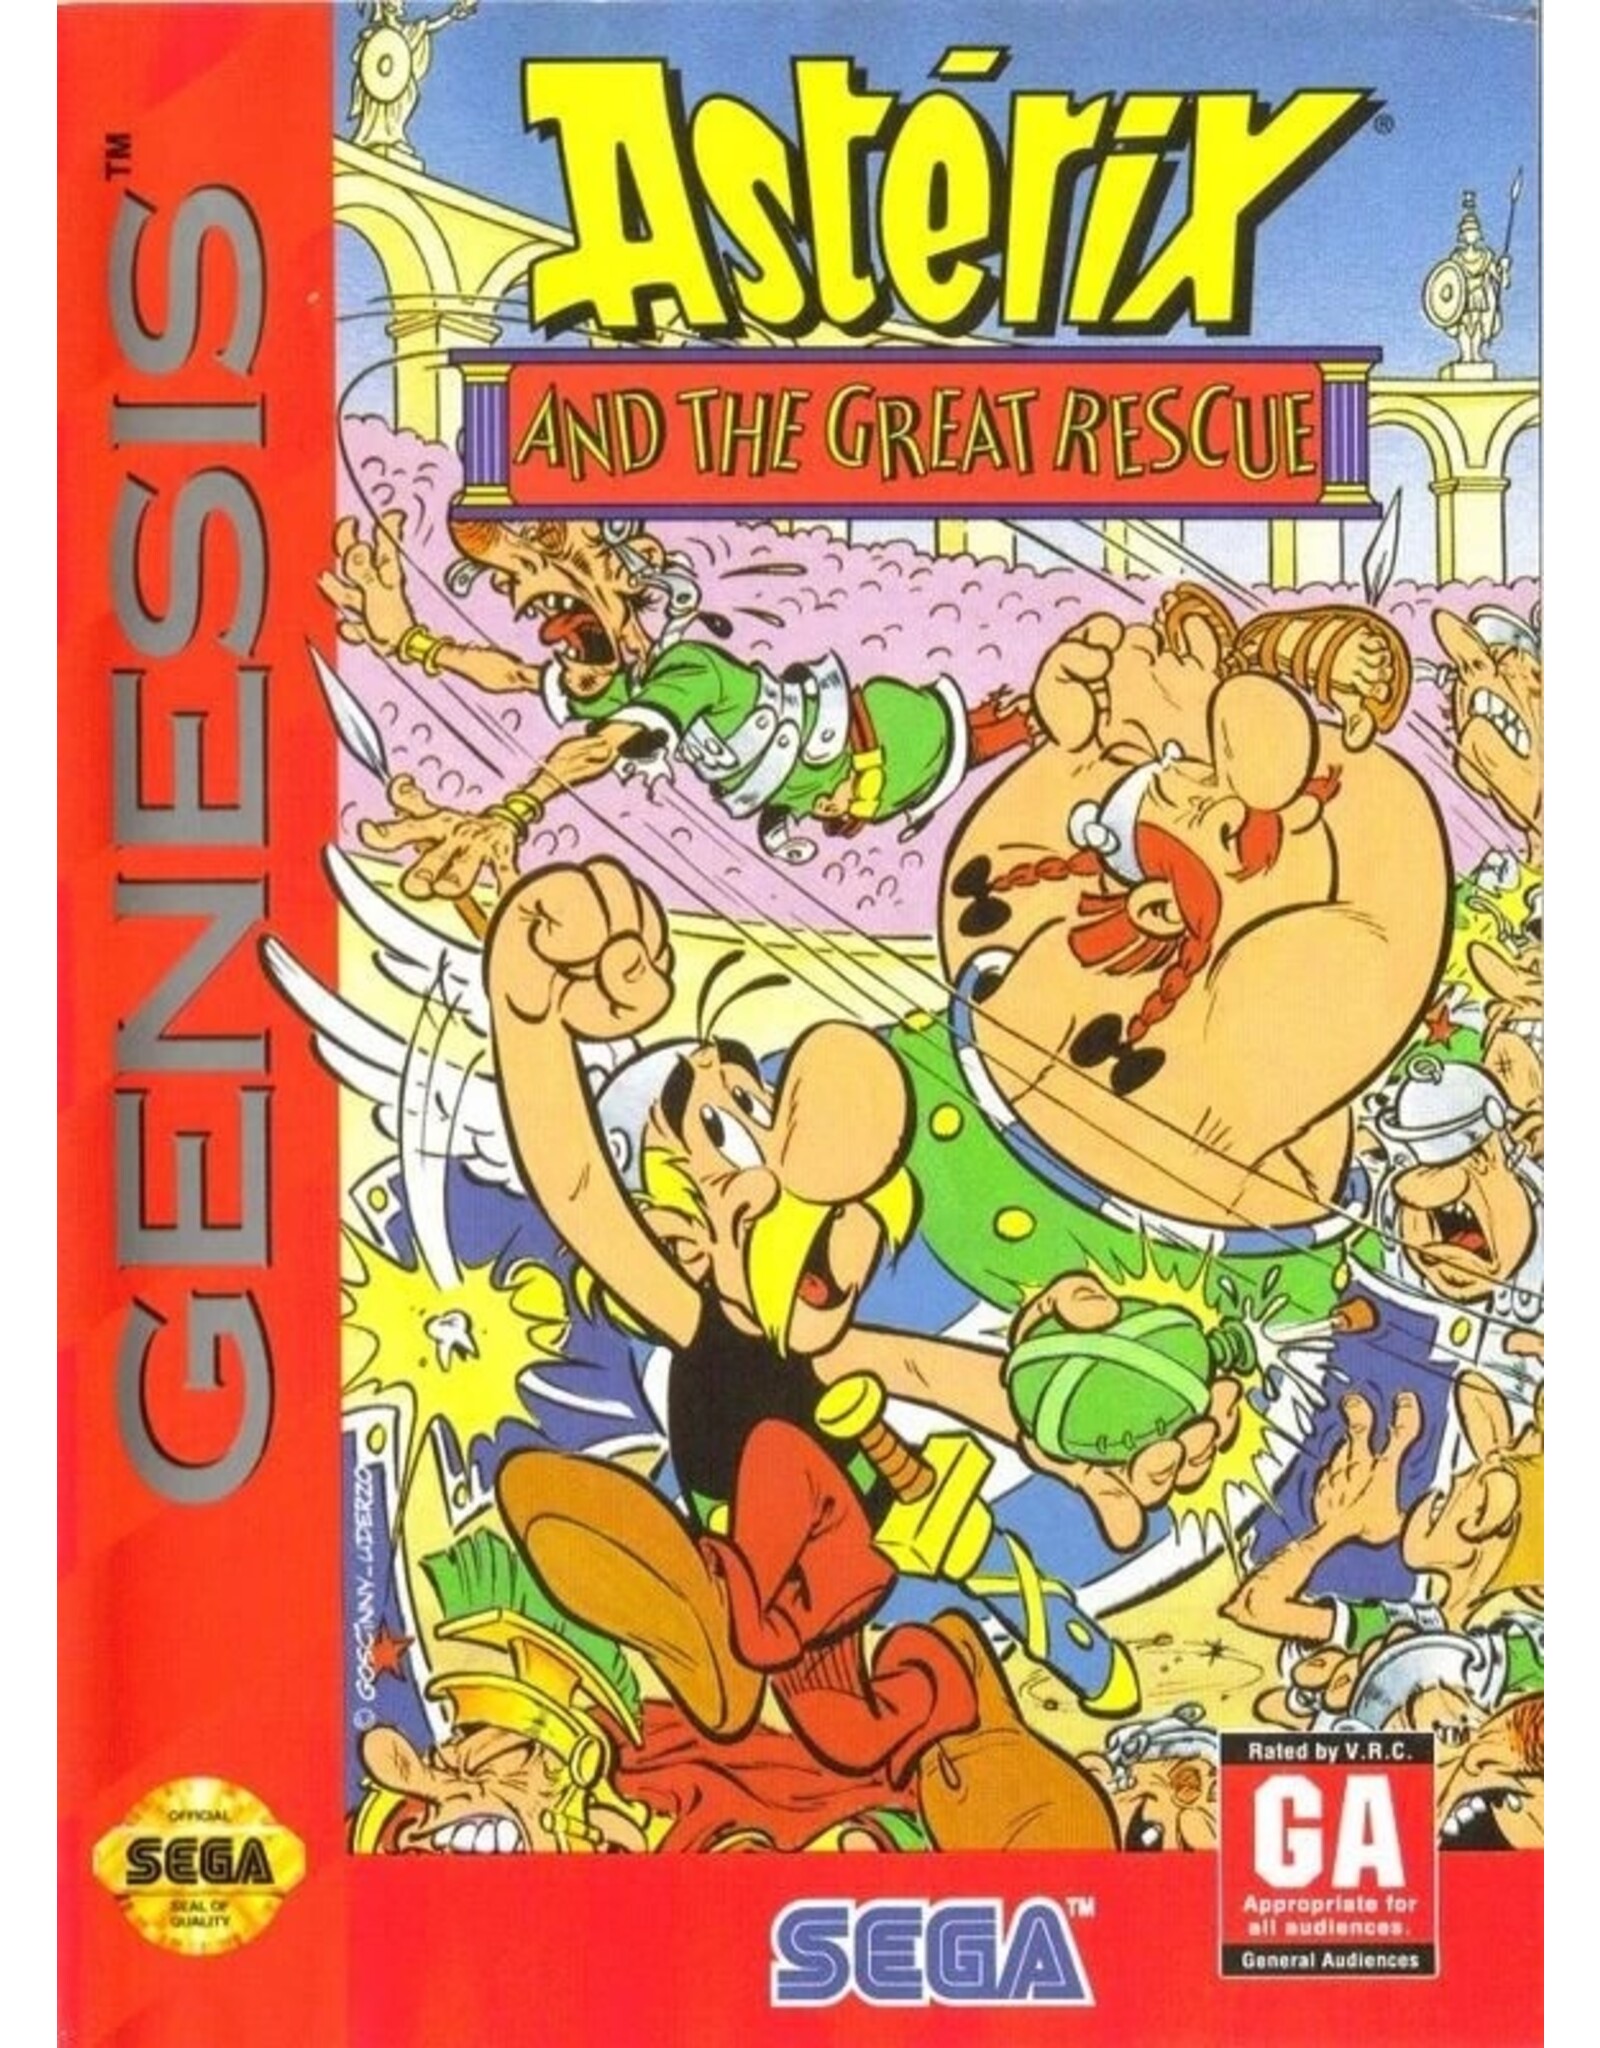 Sega Genesis Asterix and the Great Rescue (Boxed, No Manual)